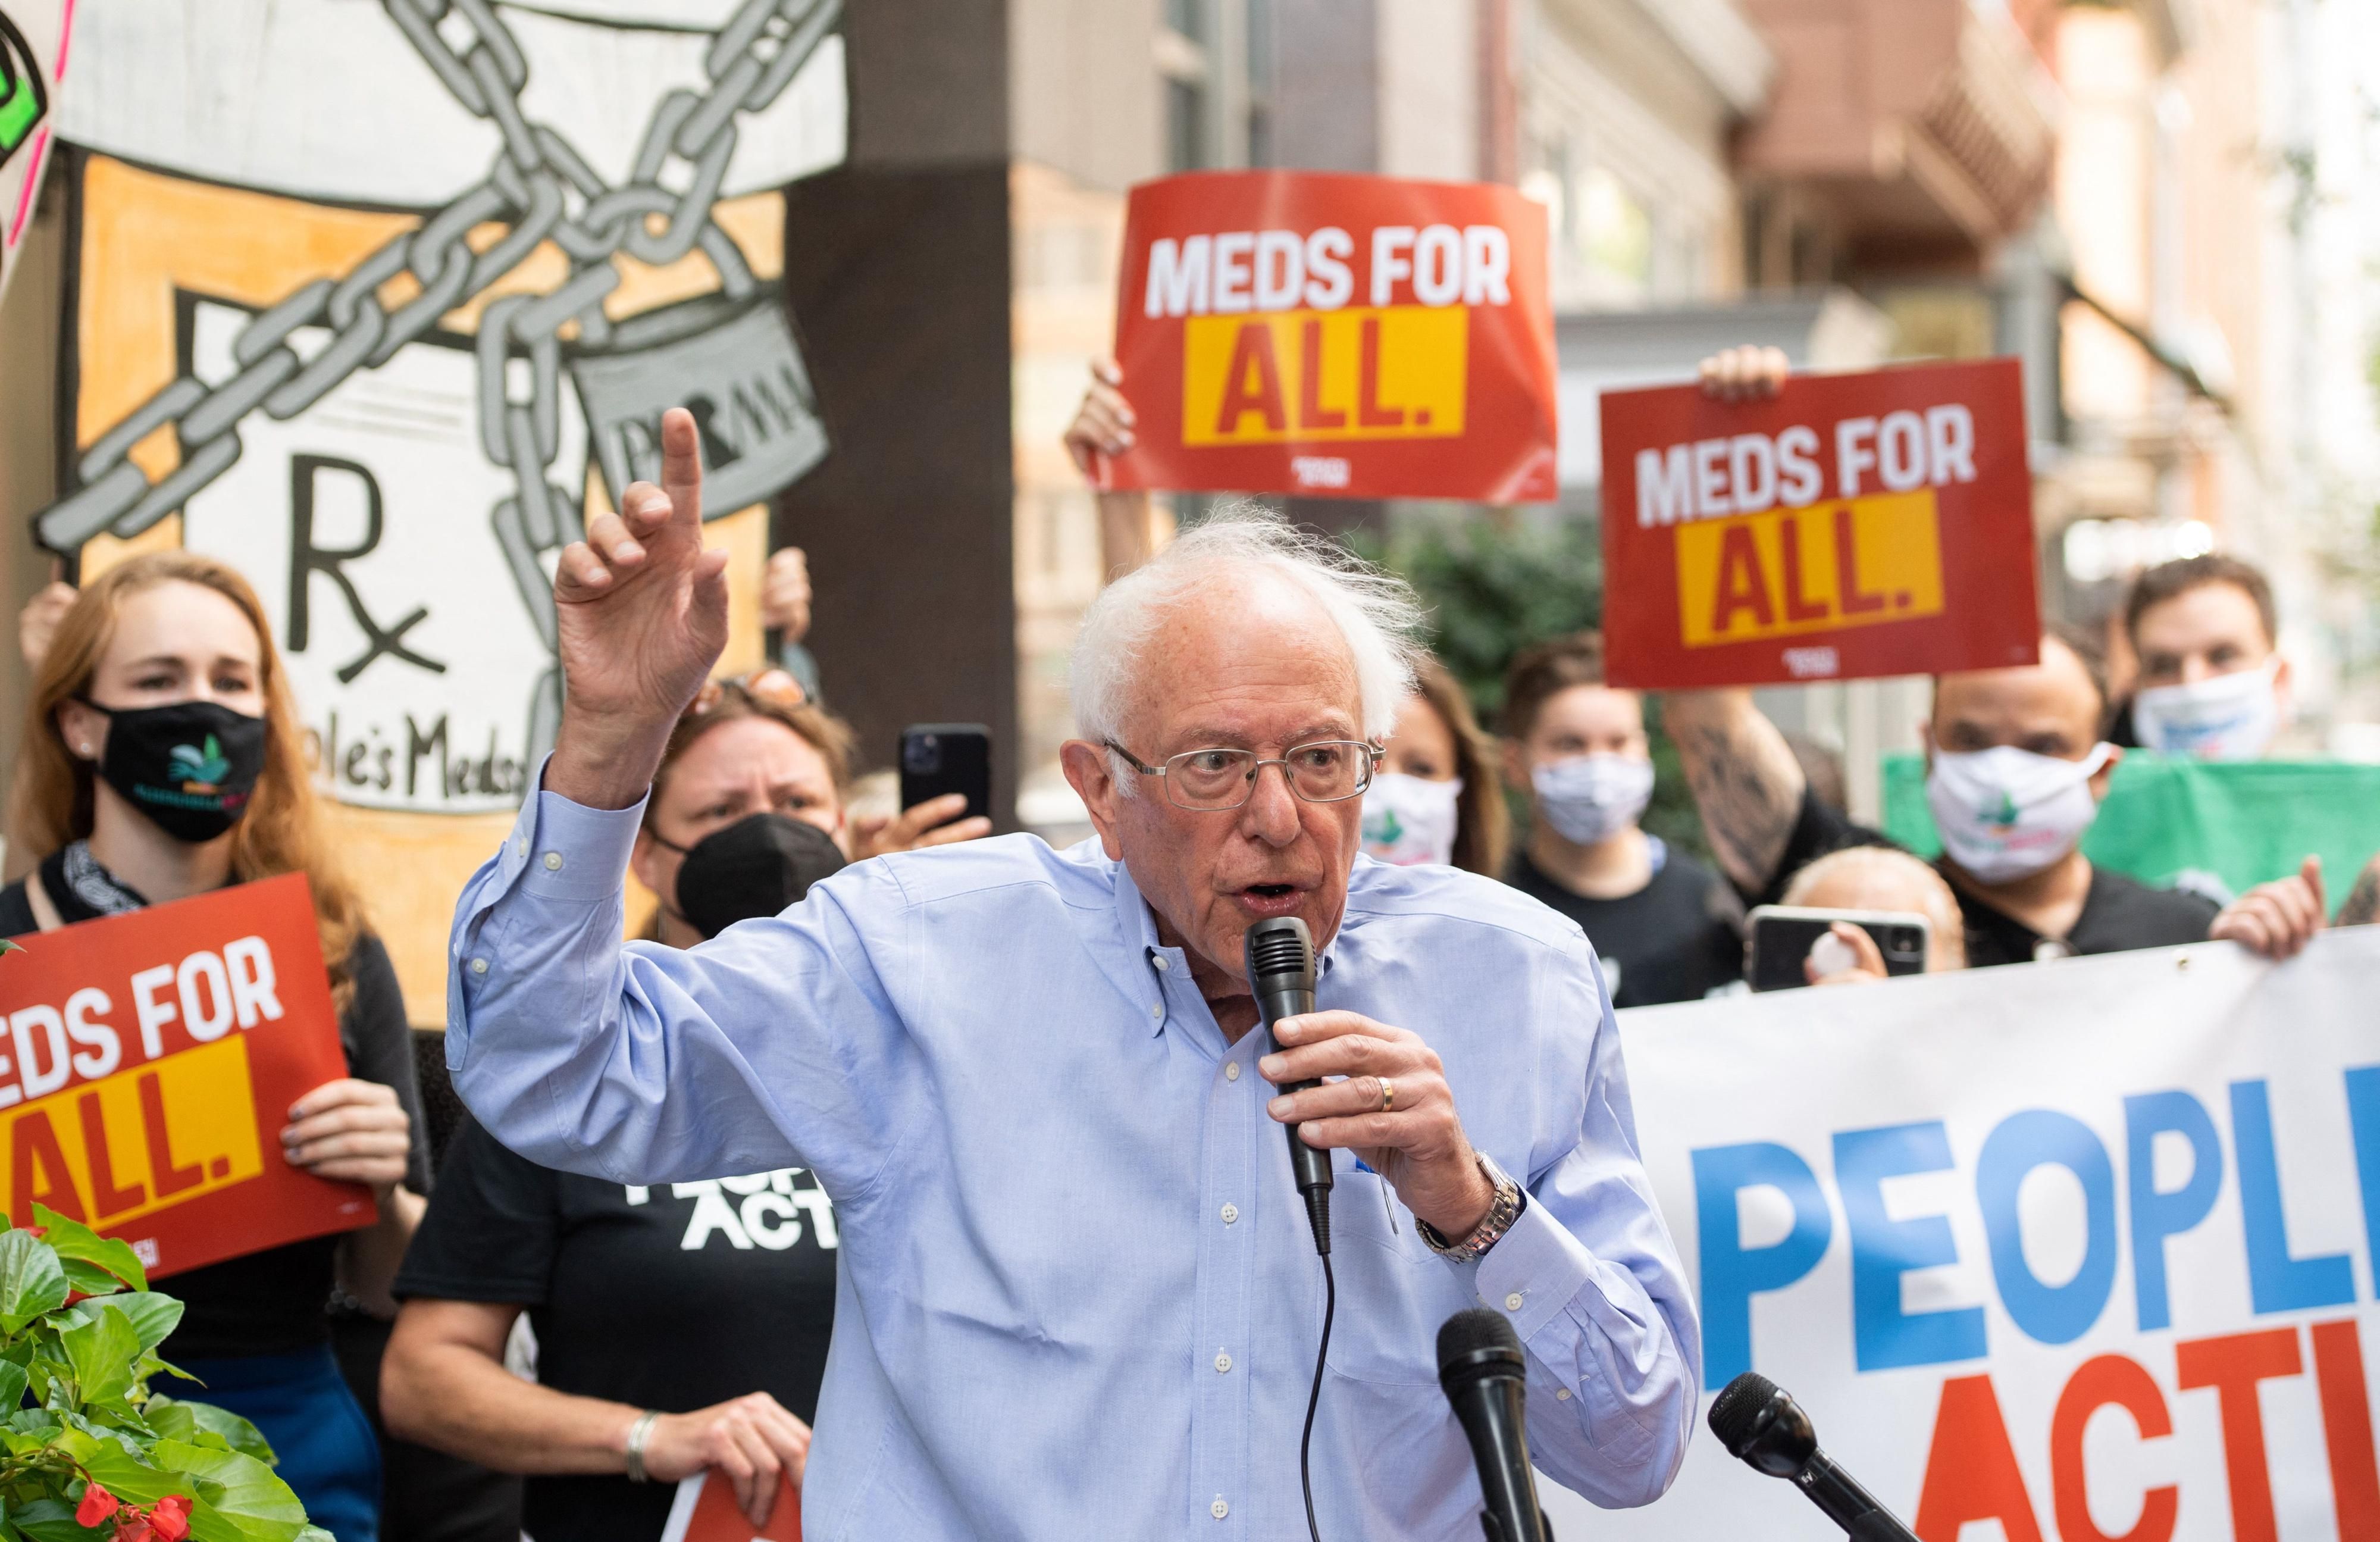 Bernie Sanders at "Meds for All" rally